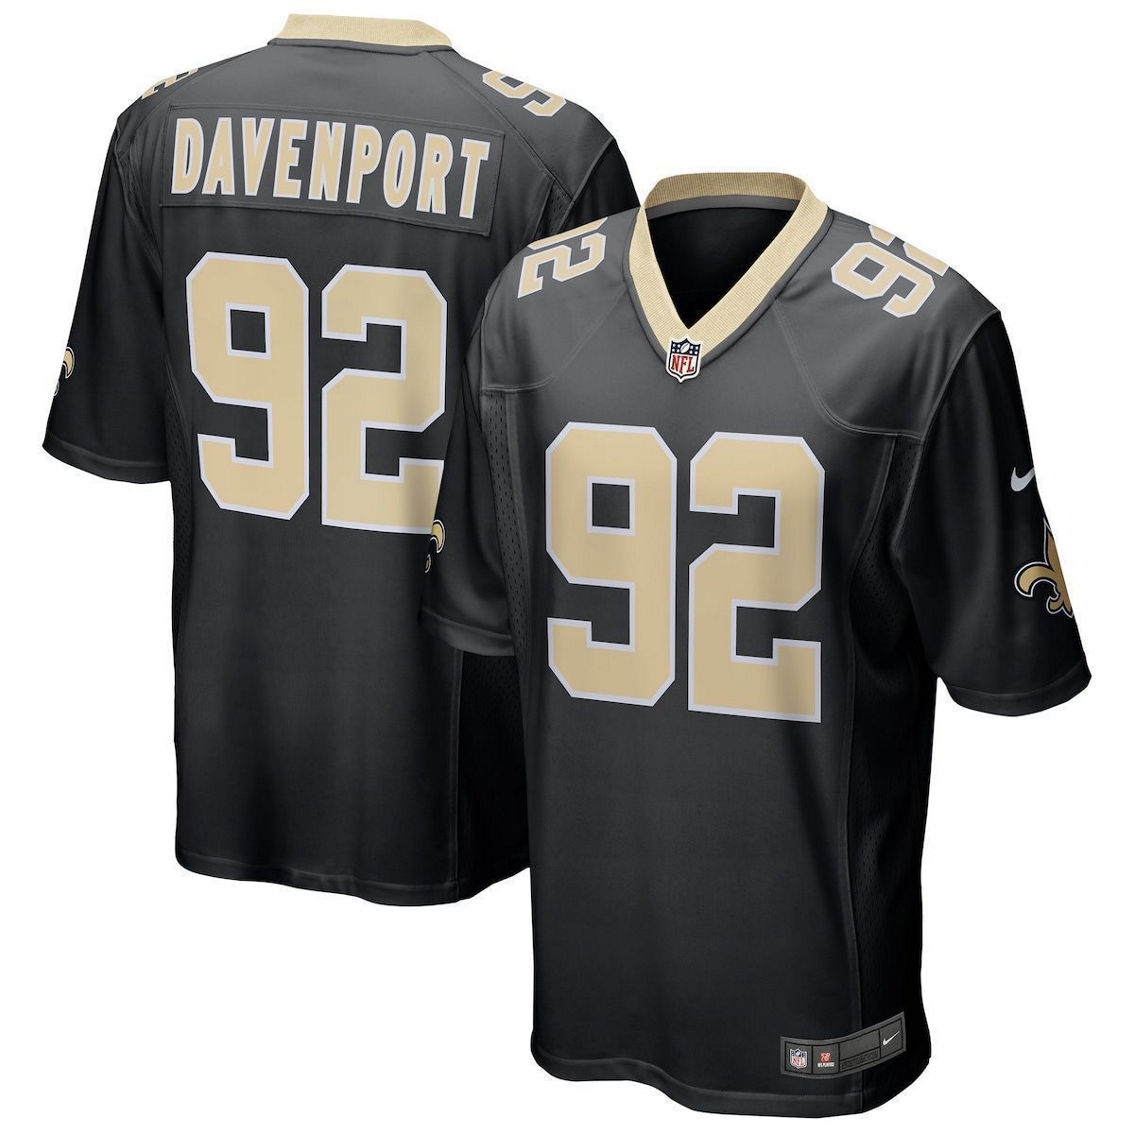 Nike Men's Marcus Davenport Black New Orleans Saints Game Jersey - Image 2 of 4